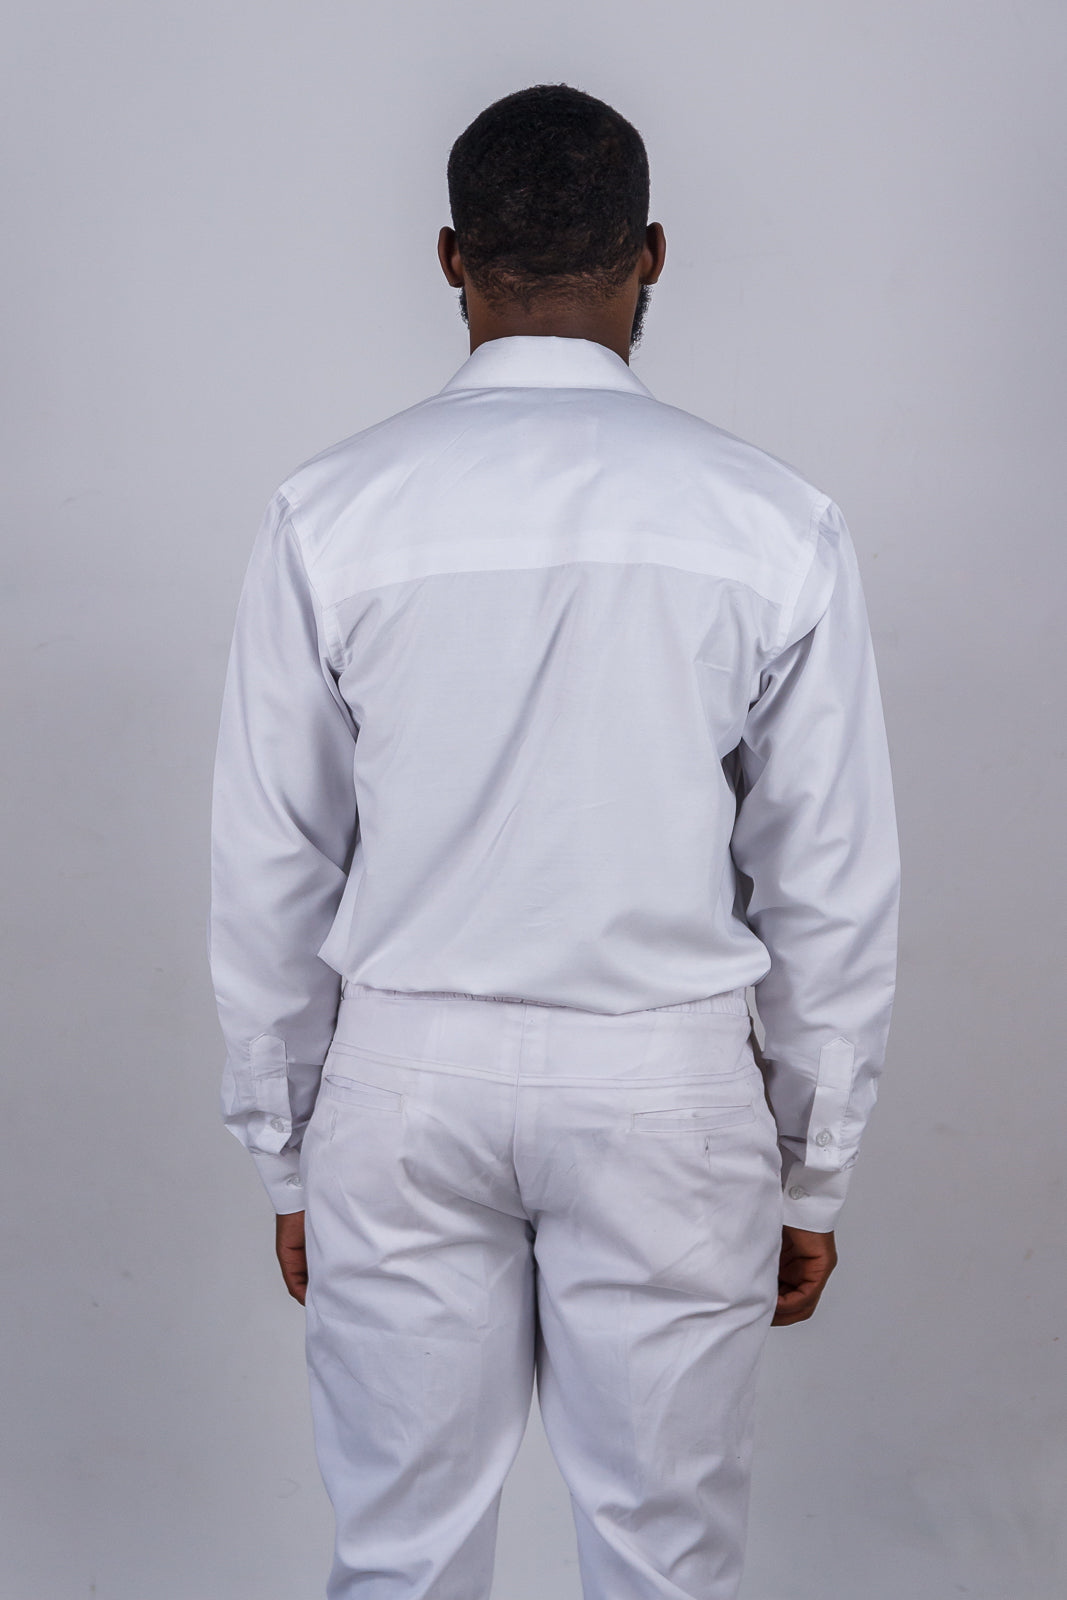 BABADUDU white and black Lounge Wear | African inspired Men's wear